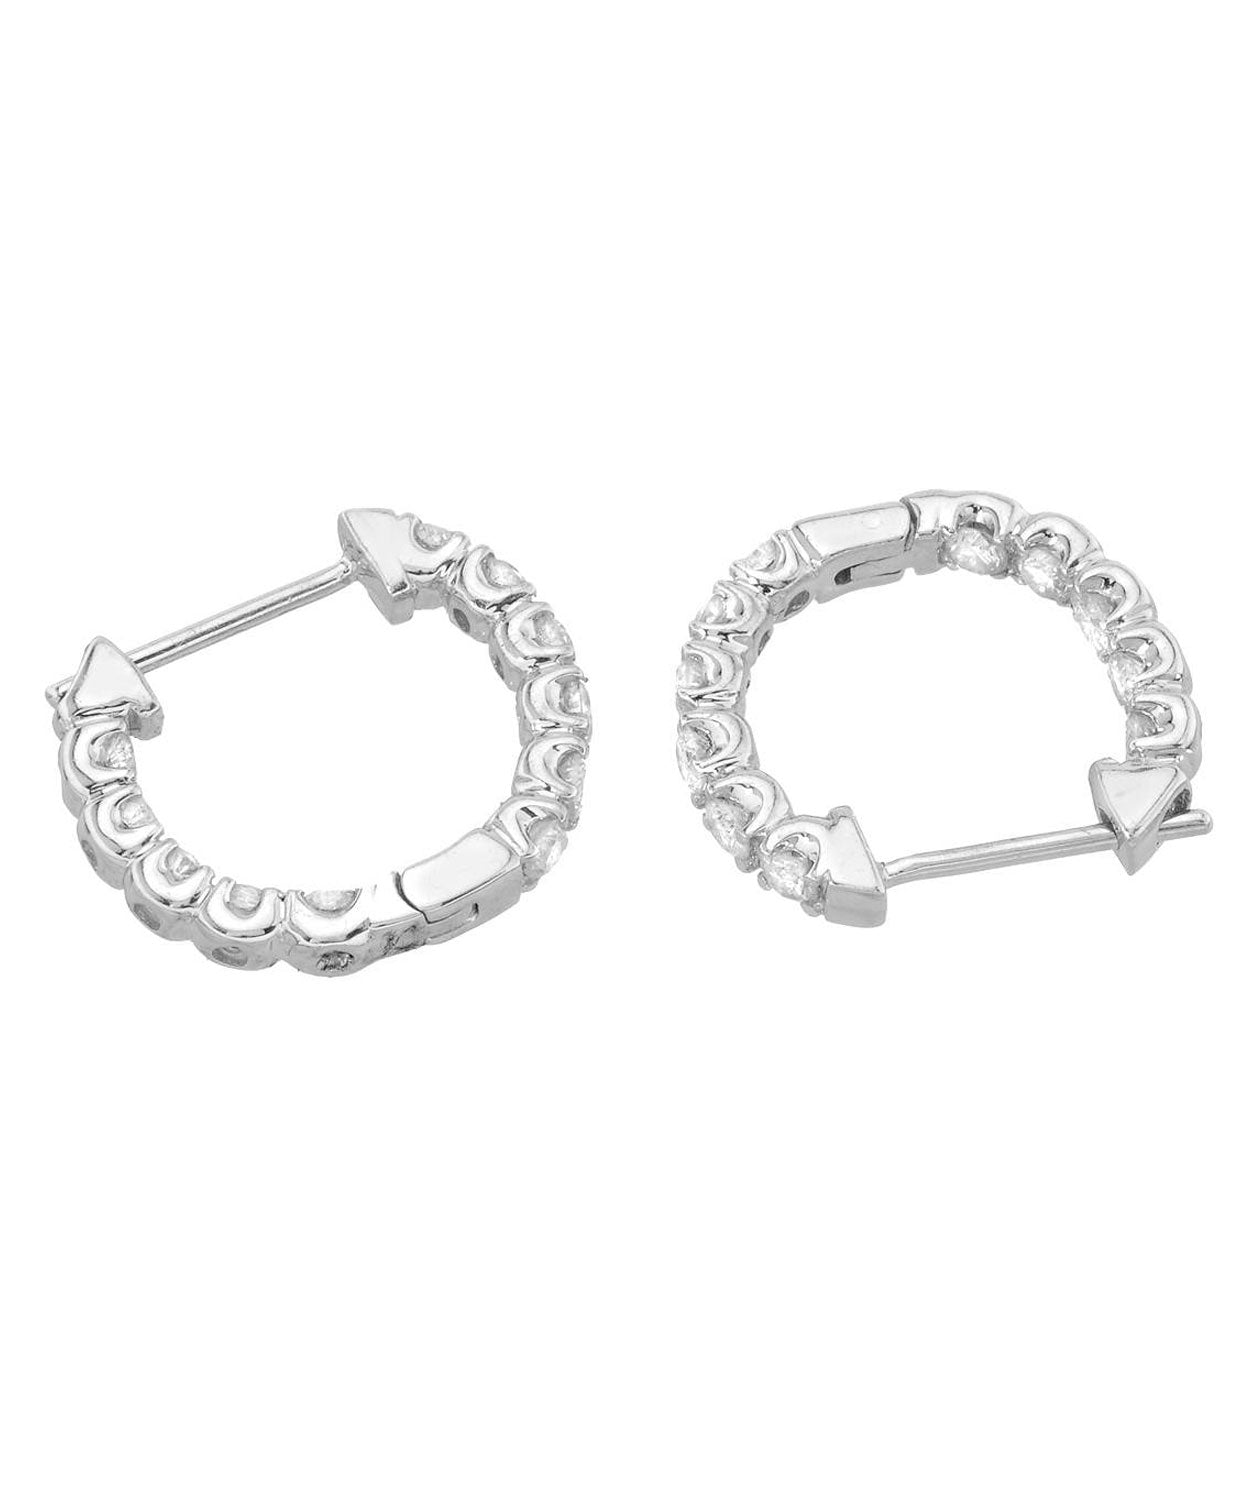 1.04 ctw Diamond 14k White Gold Inside-Out Hoop Earrings View 2